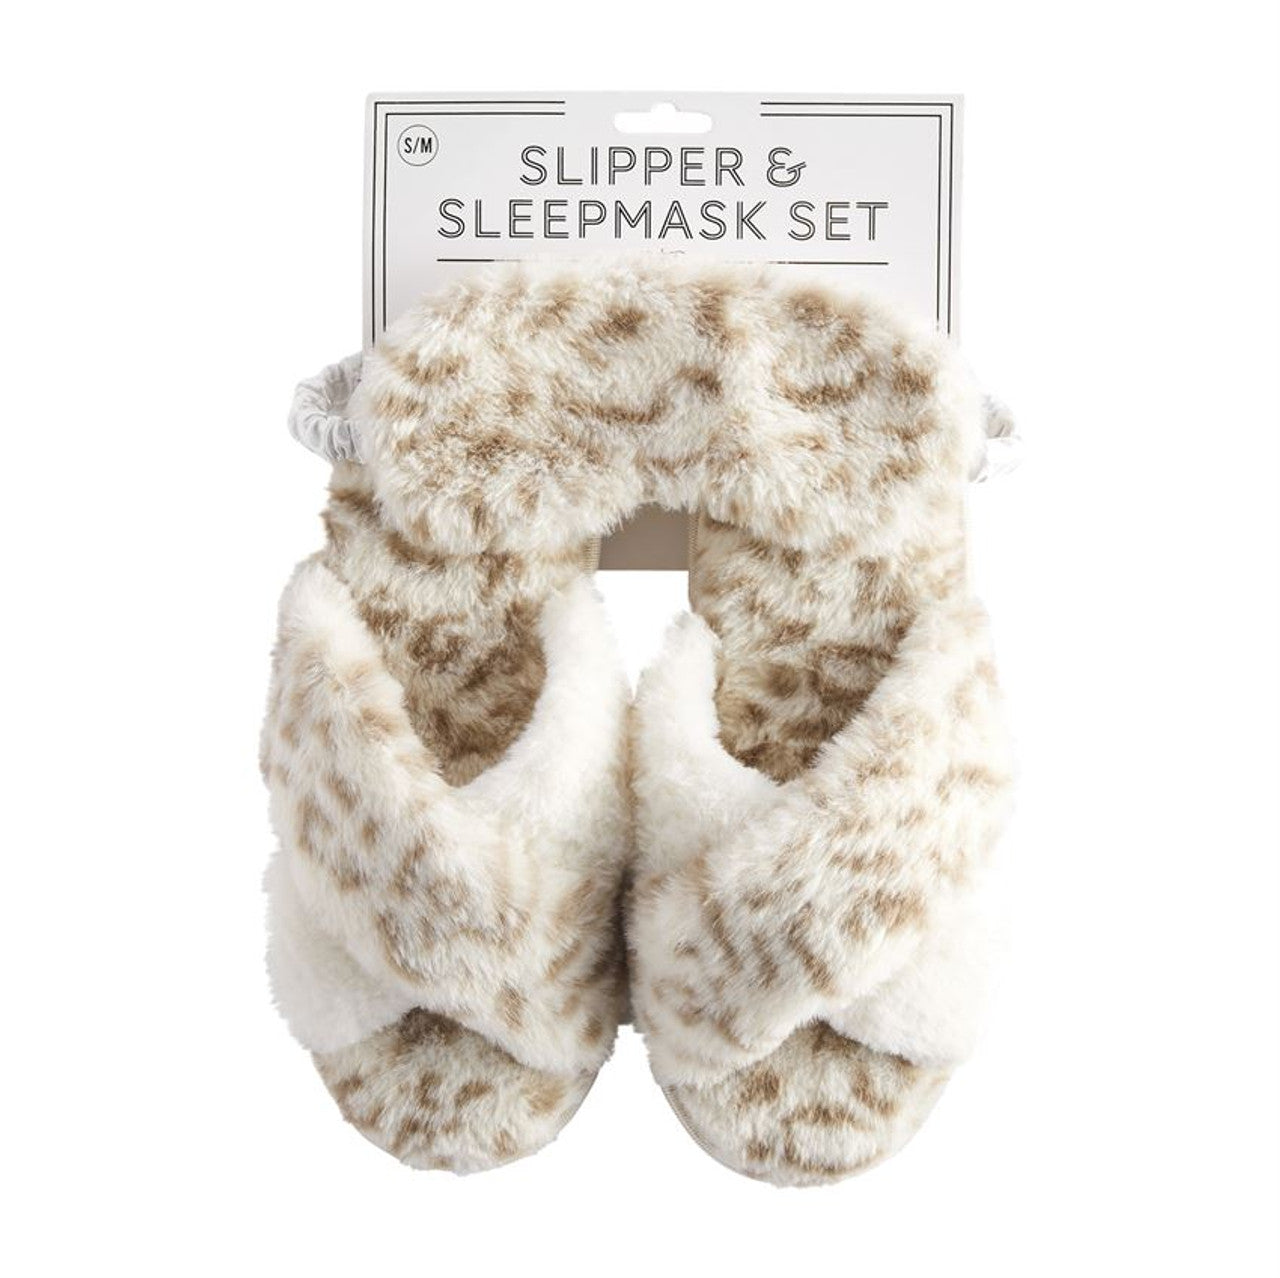 Cream leopard slipper and sleep mask set.